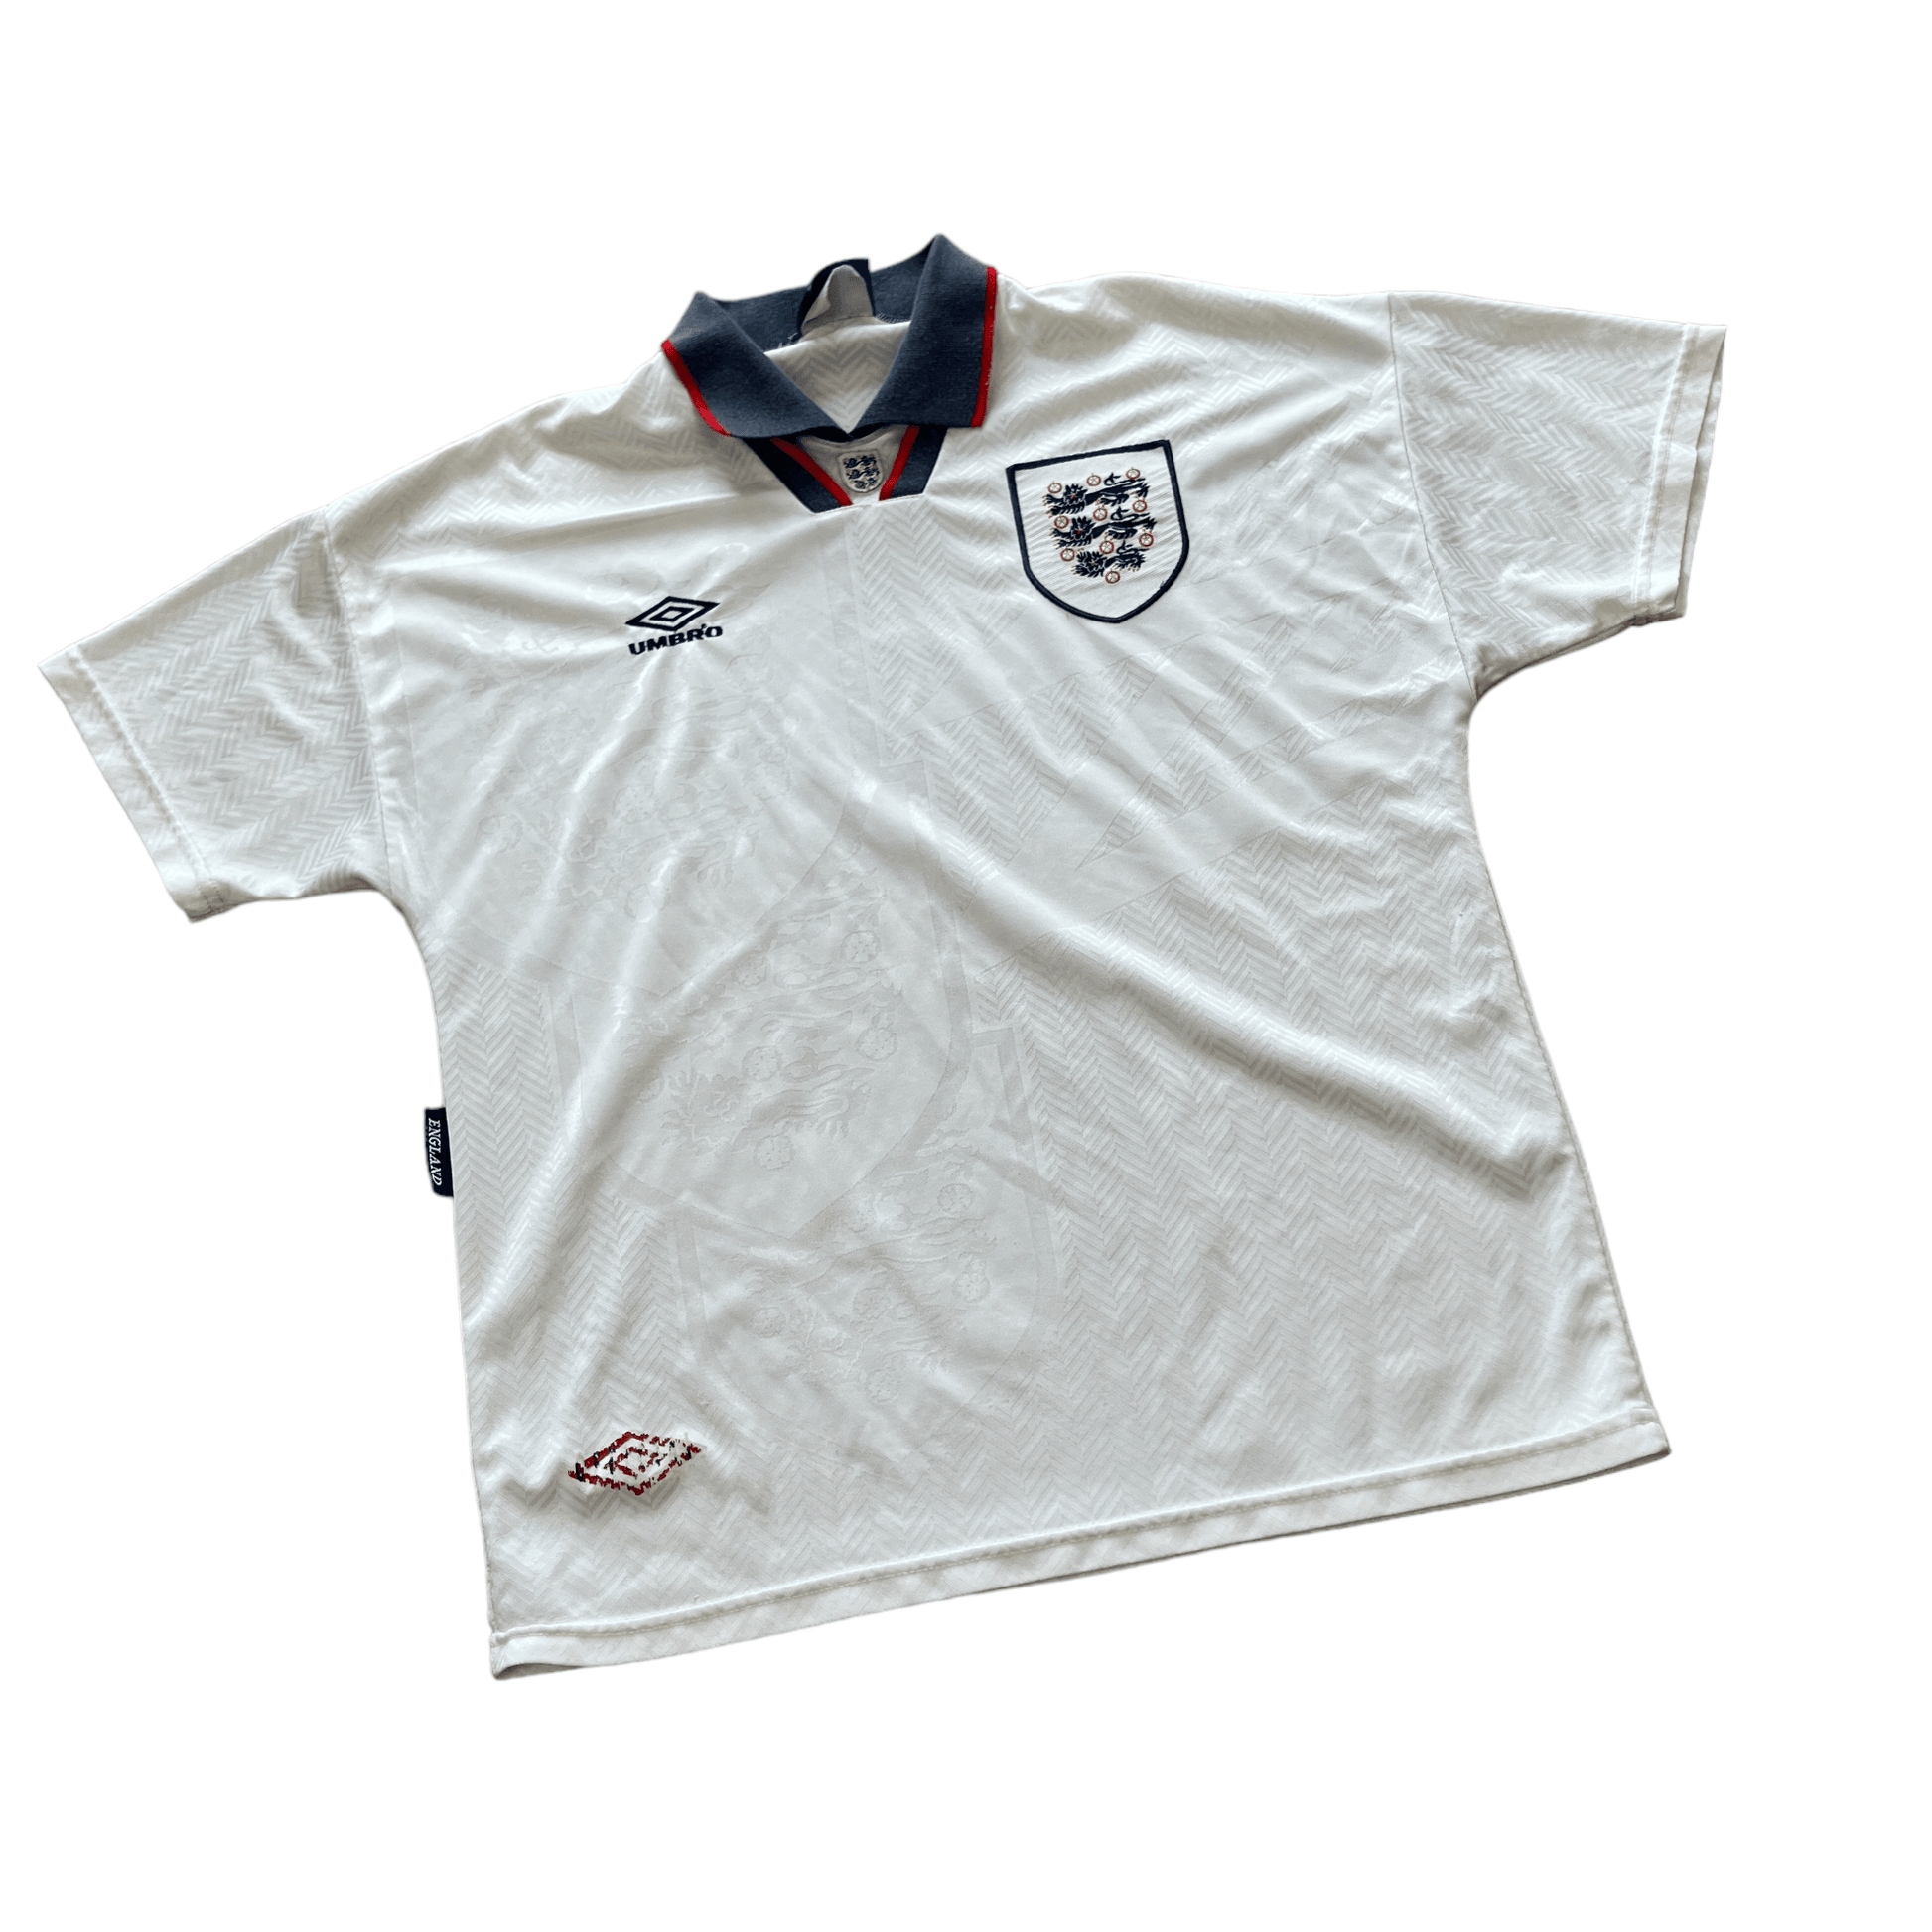 1993-95 White Umbro England Shirt - Large - The Streetwear Studio